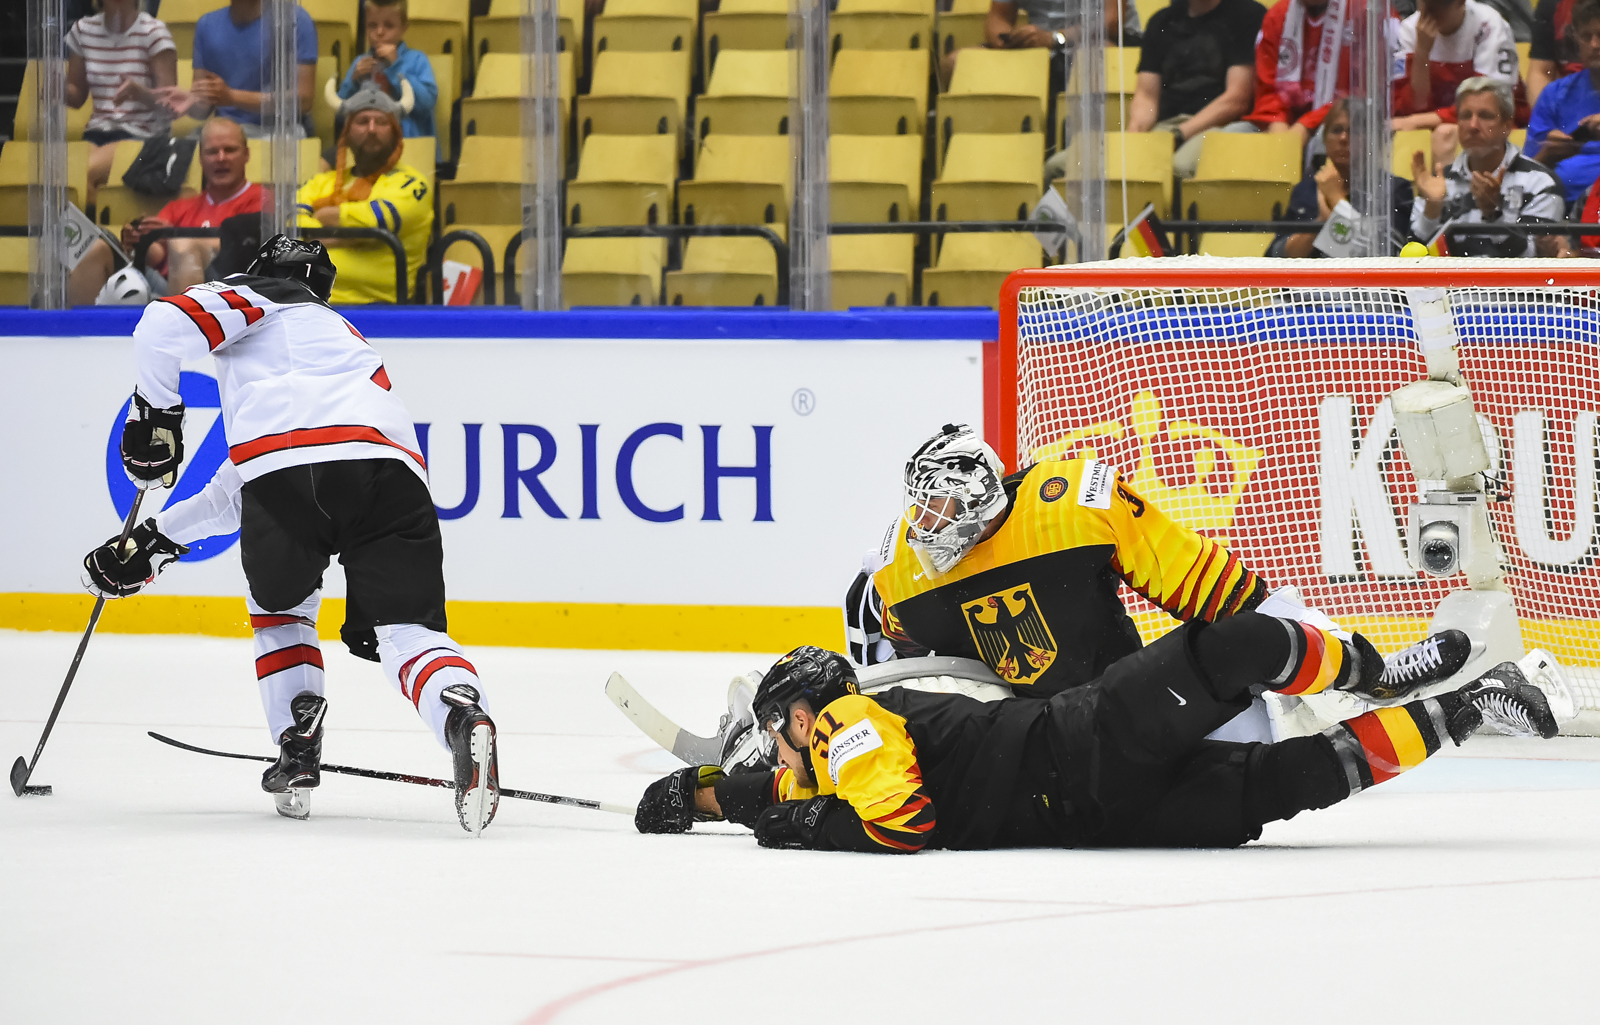 IIHF - Gallery: Canada vs. Germany